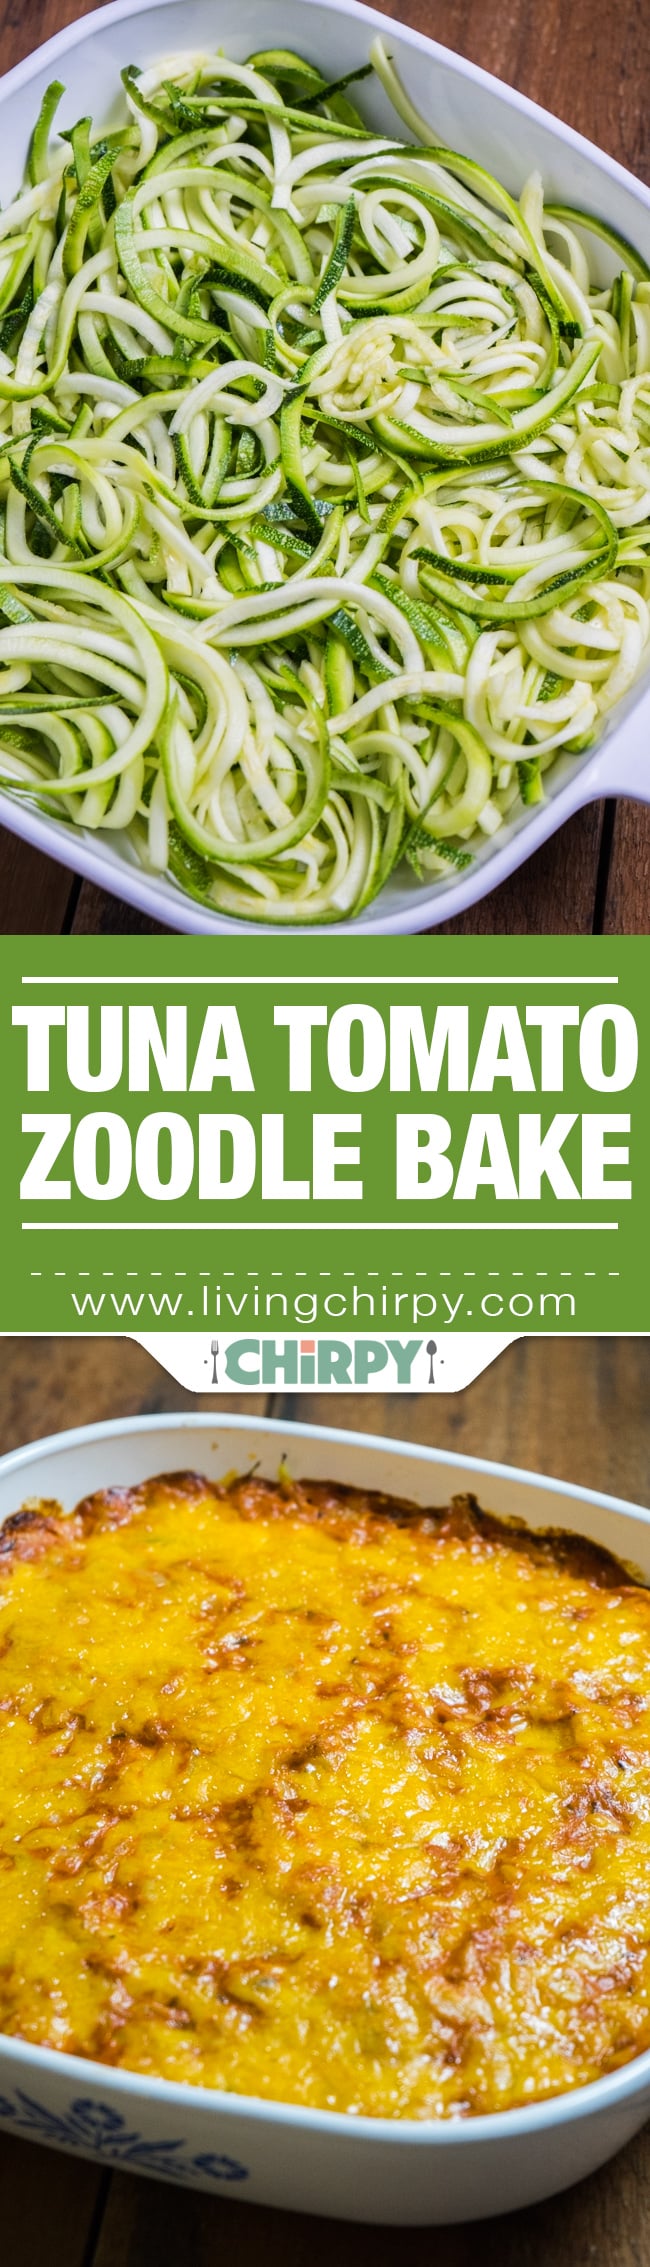 Tuna Tomato Zoodle Bake